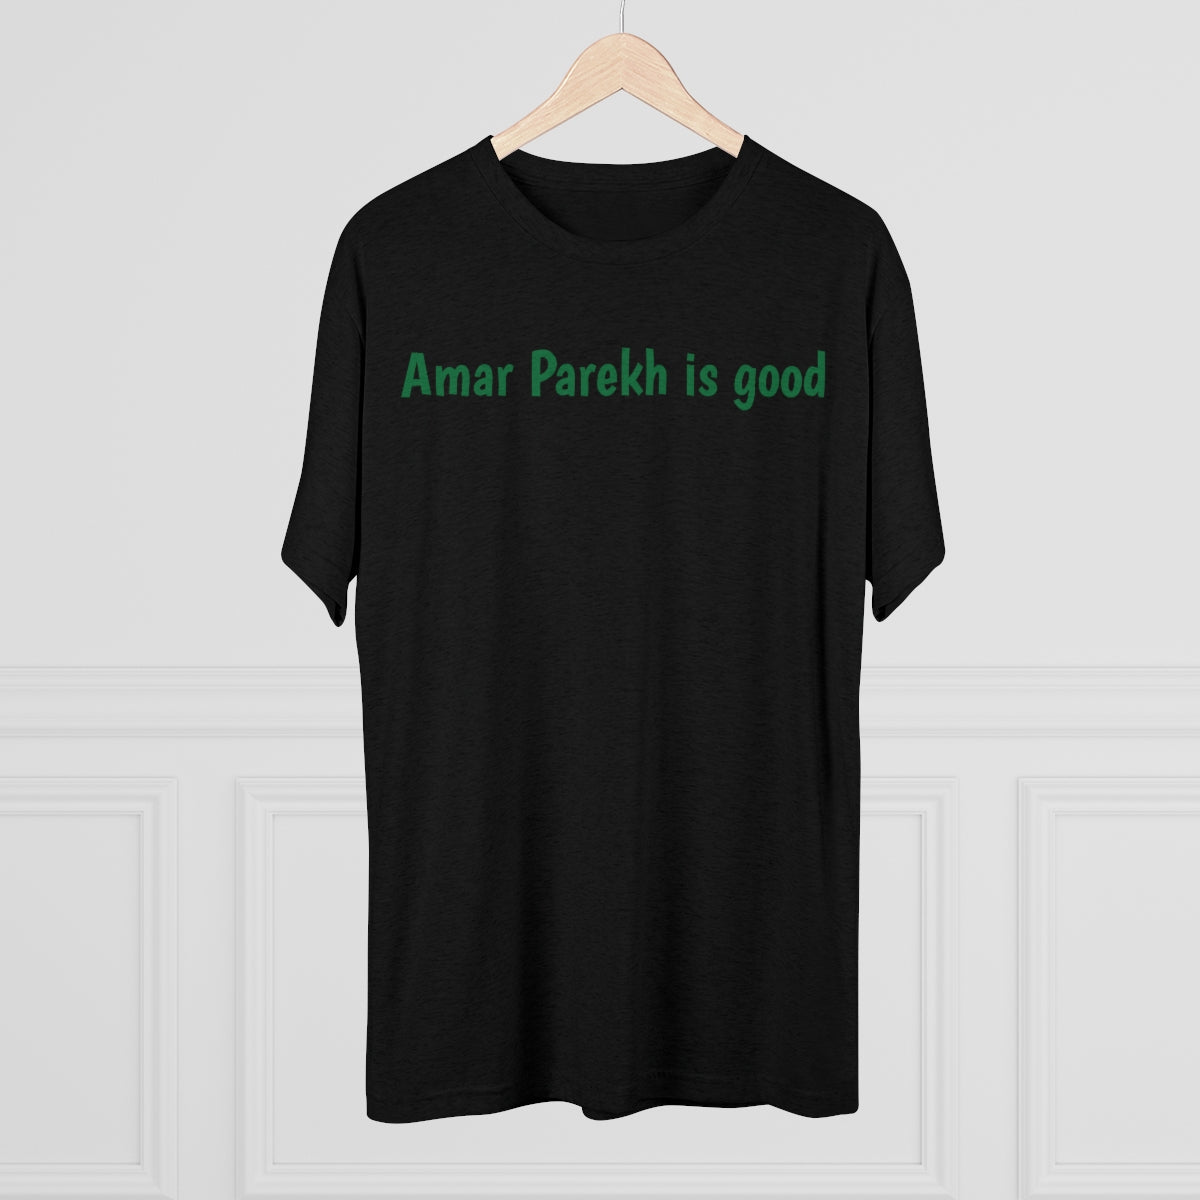 Amar Parekh is good Shirt - IsGoodBrand